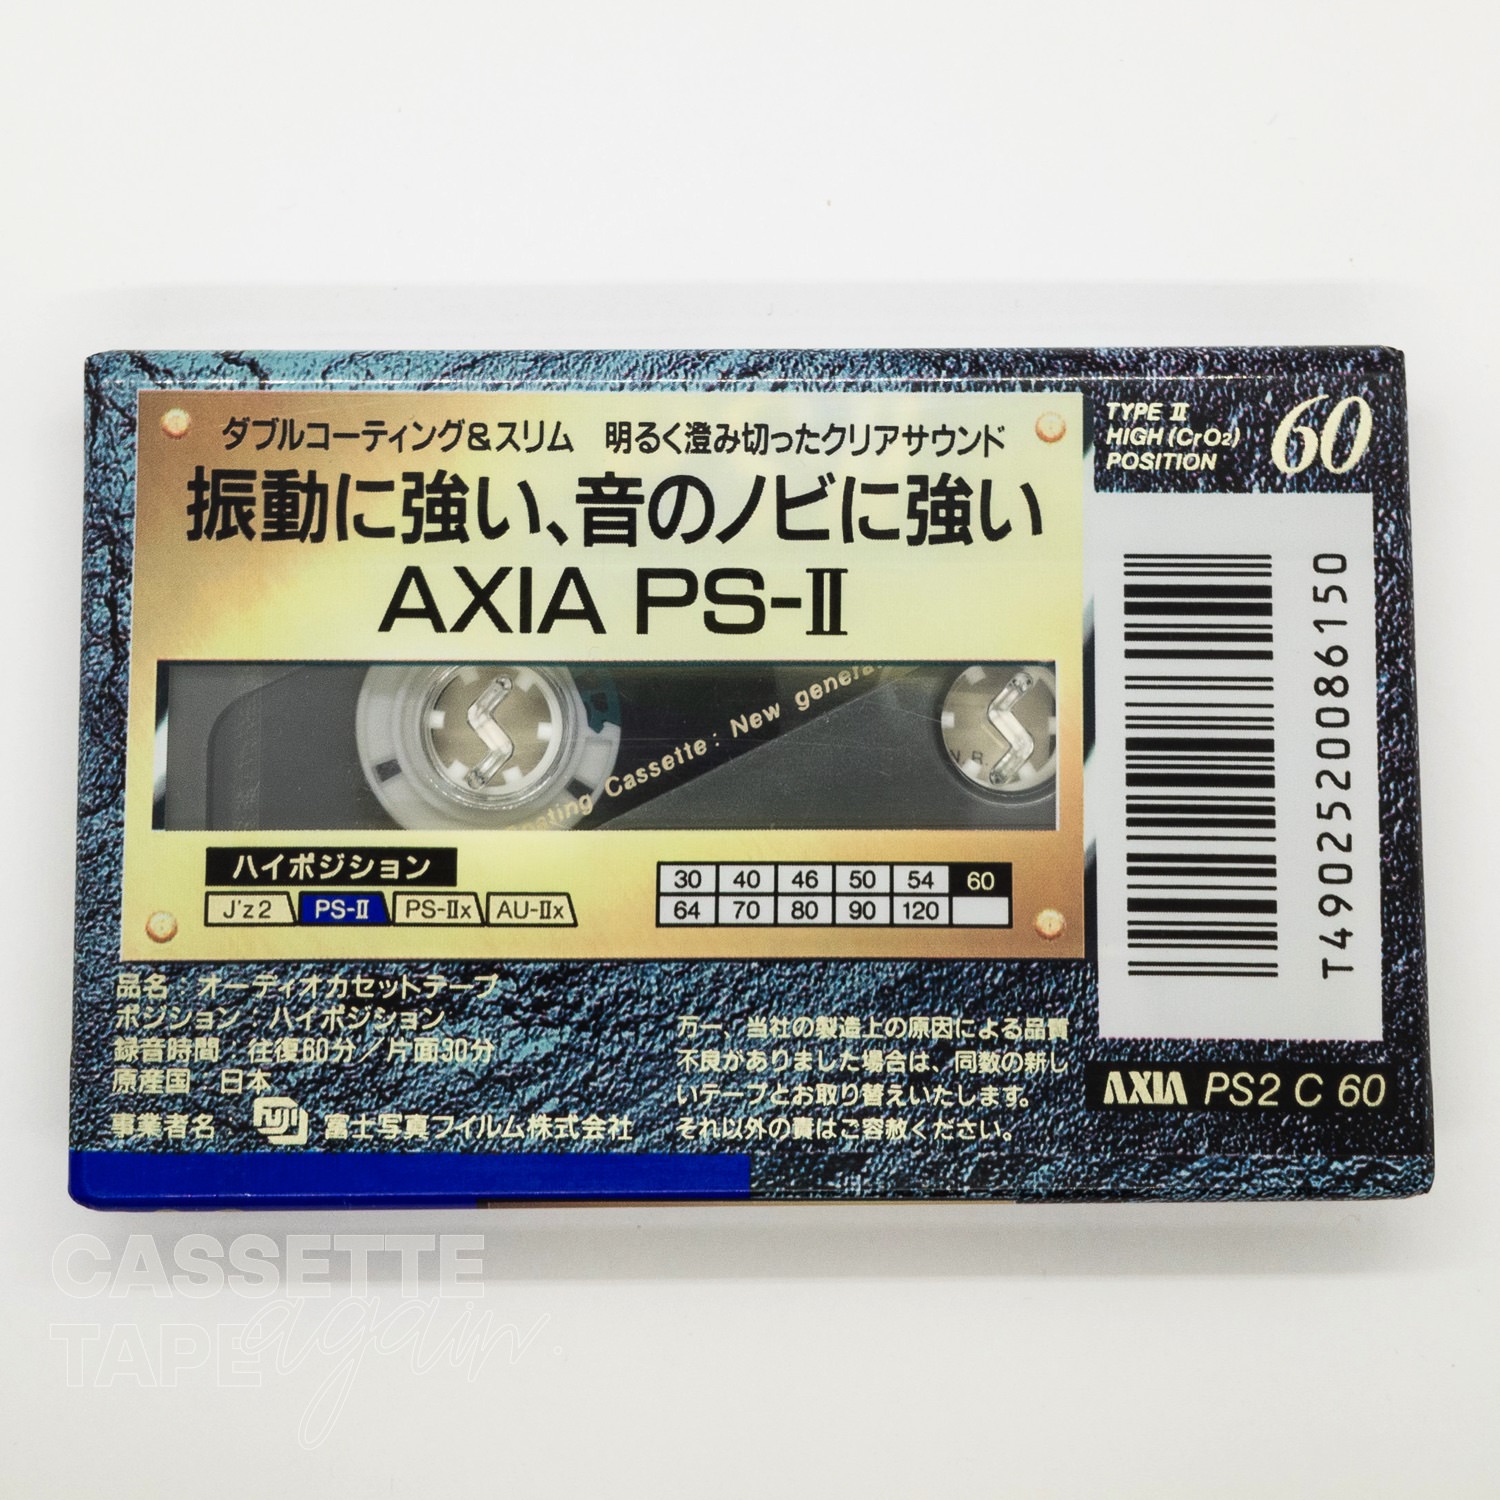 PS2 60 / AXIA/FUJI(ハイポジ) - CASSETTE TAPE again.